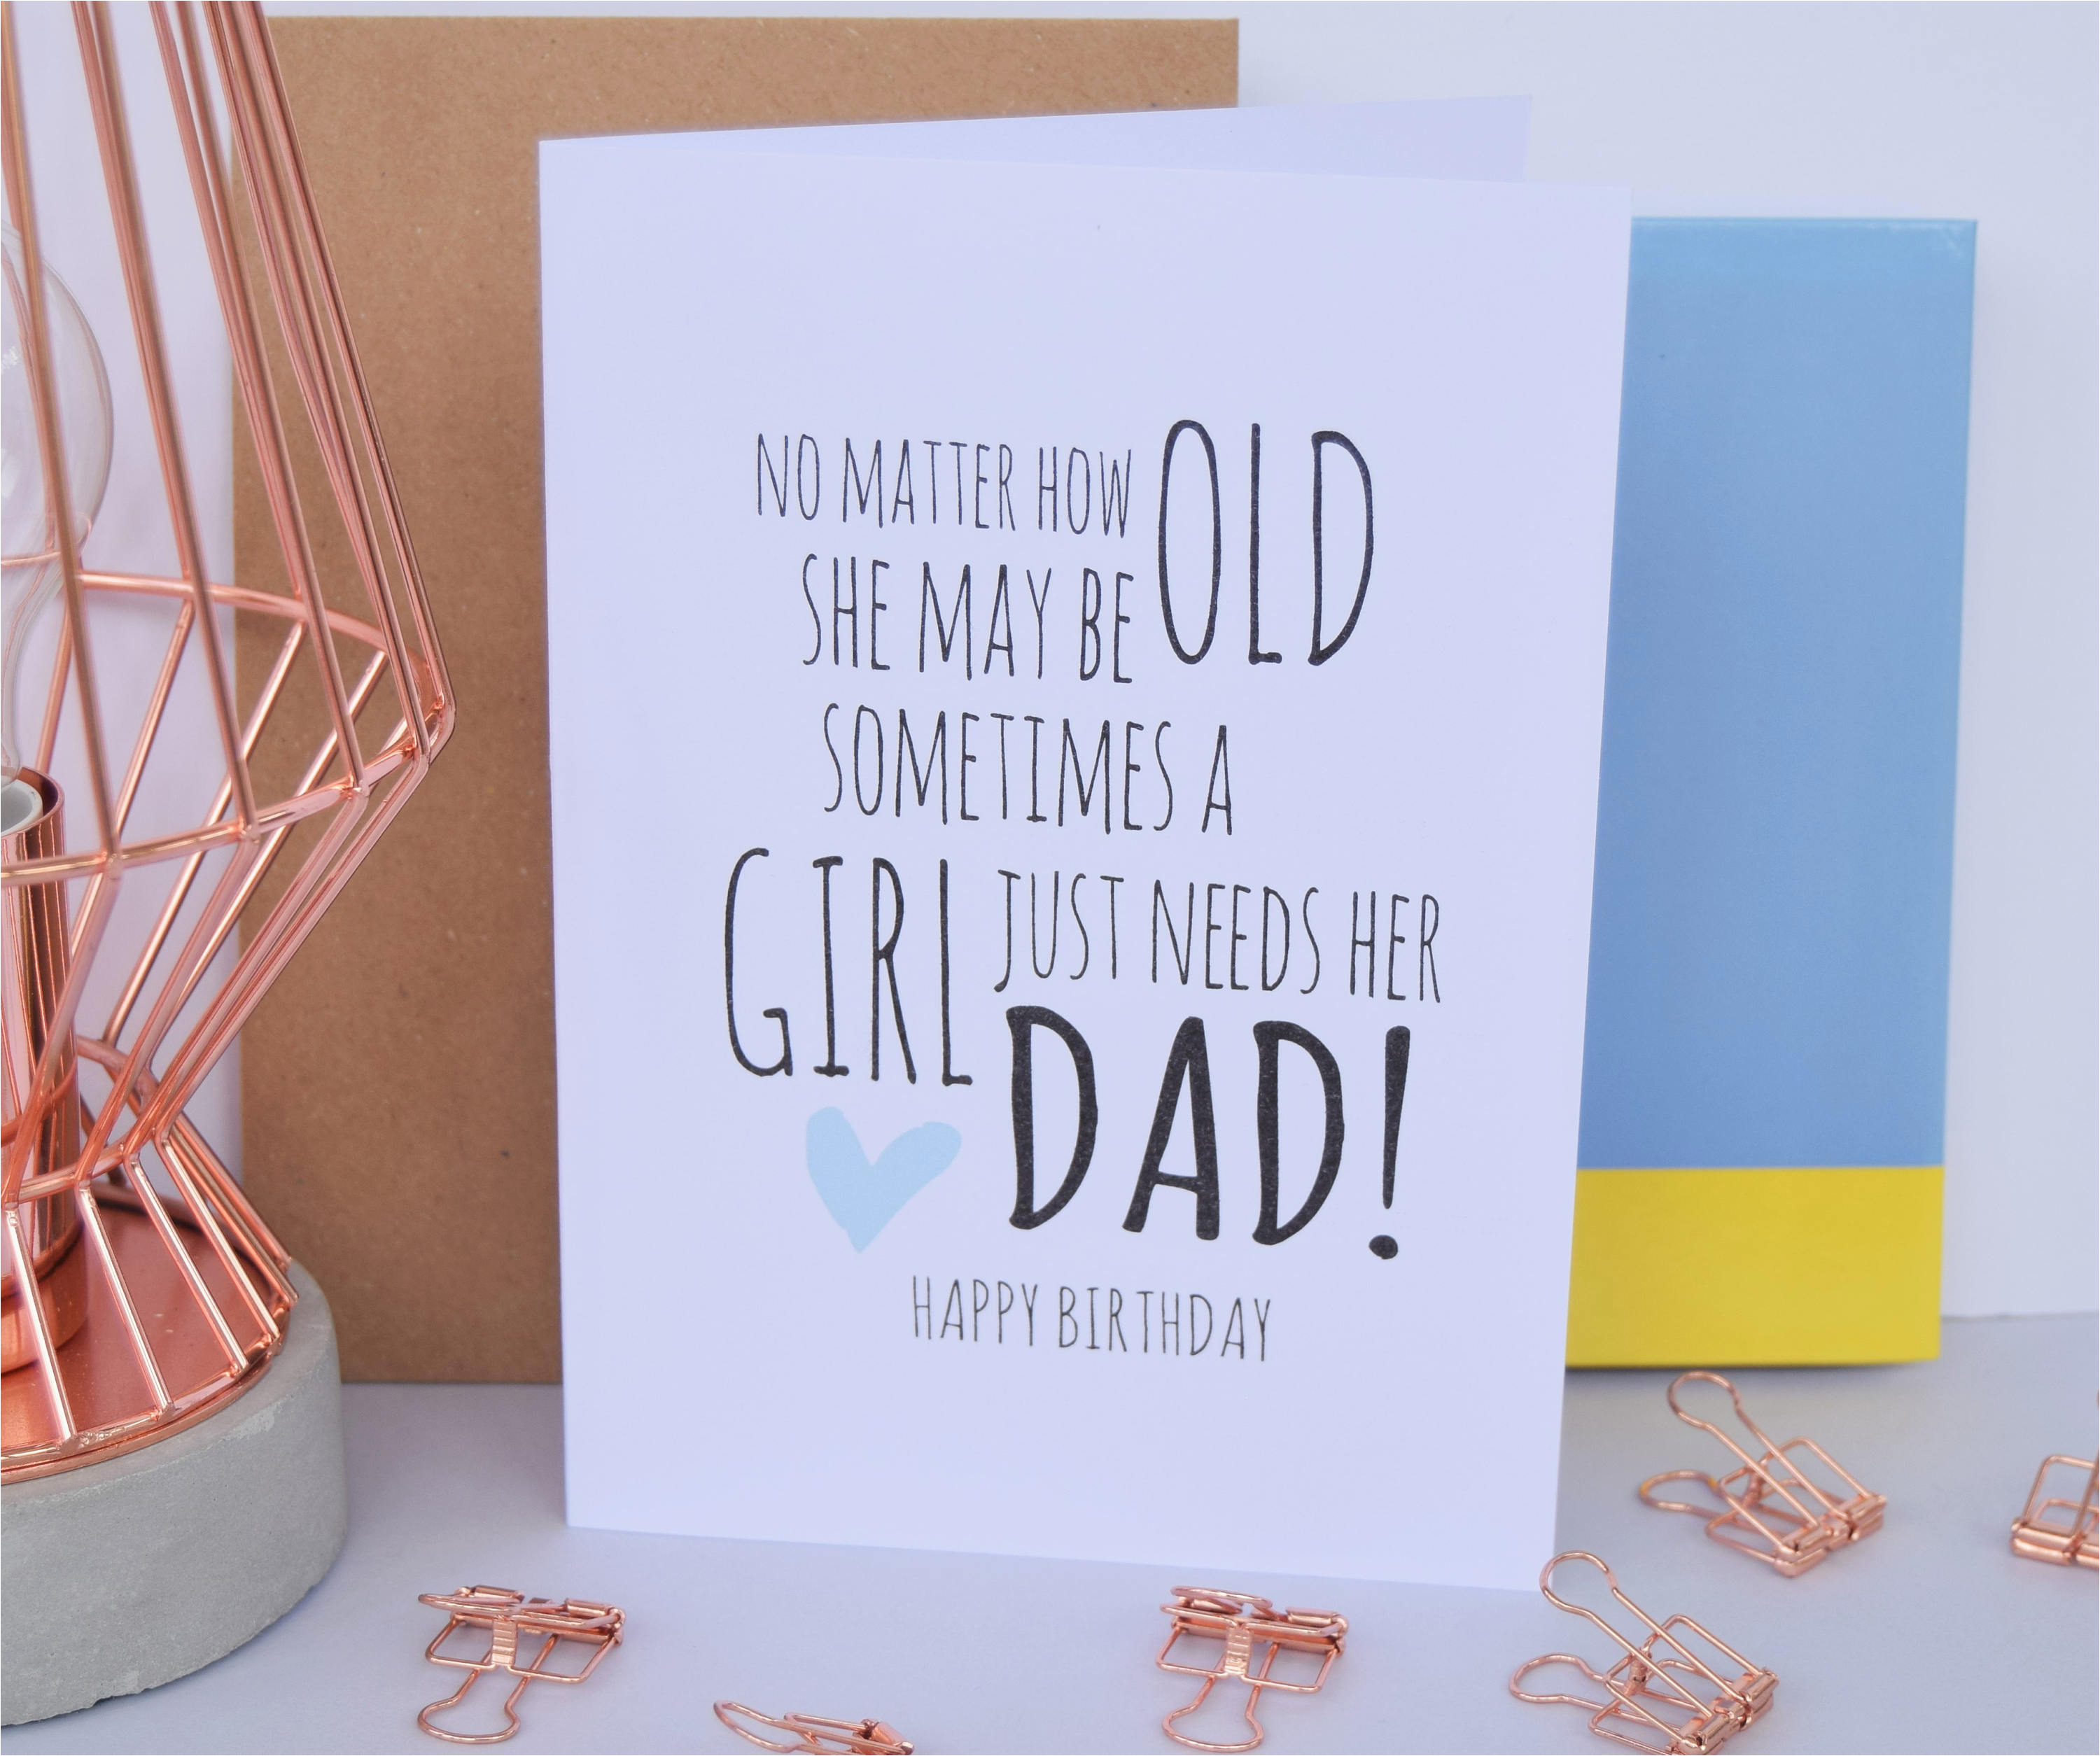 birthday-cards-to-dad-from-daughter-birthdaybuzz